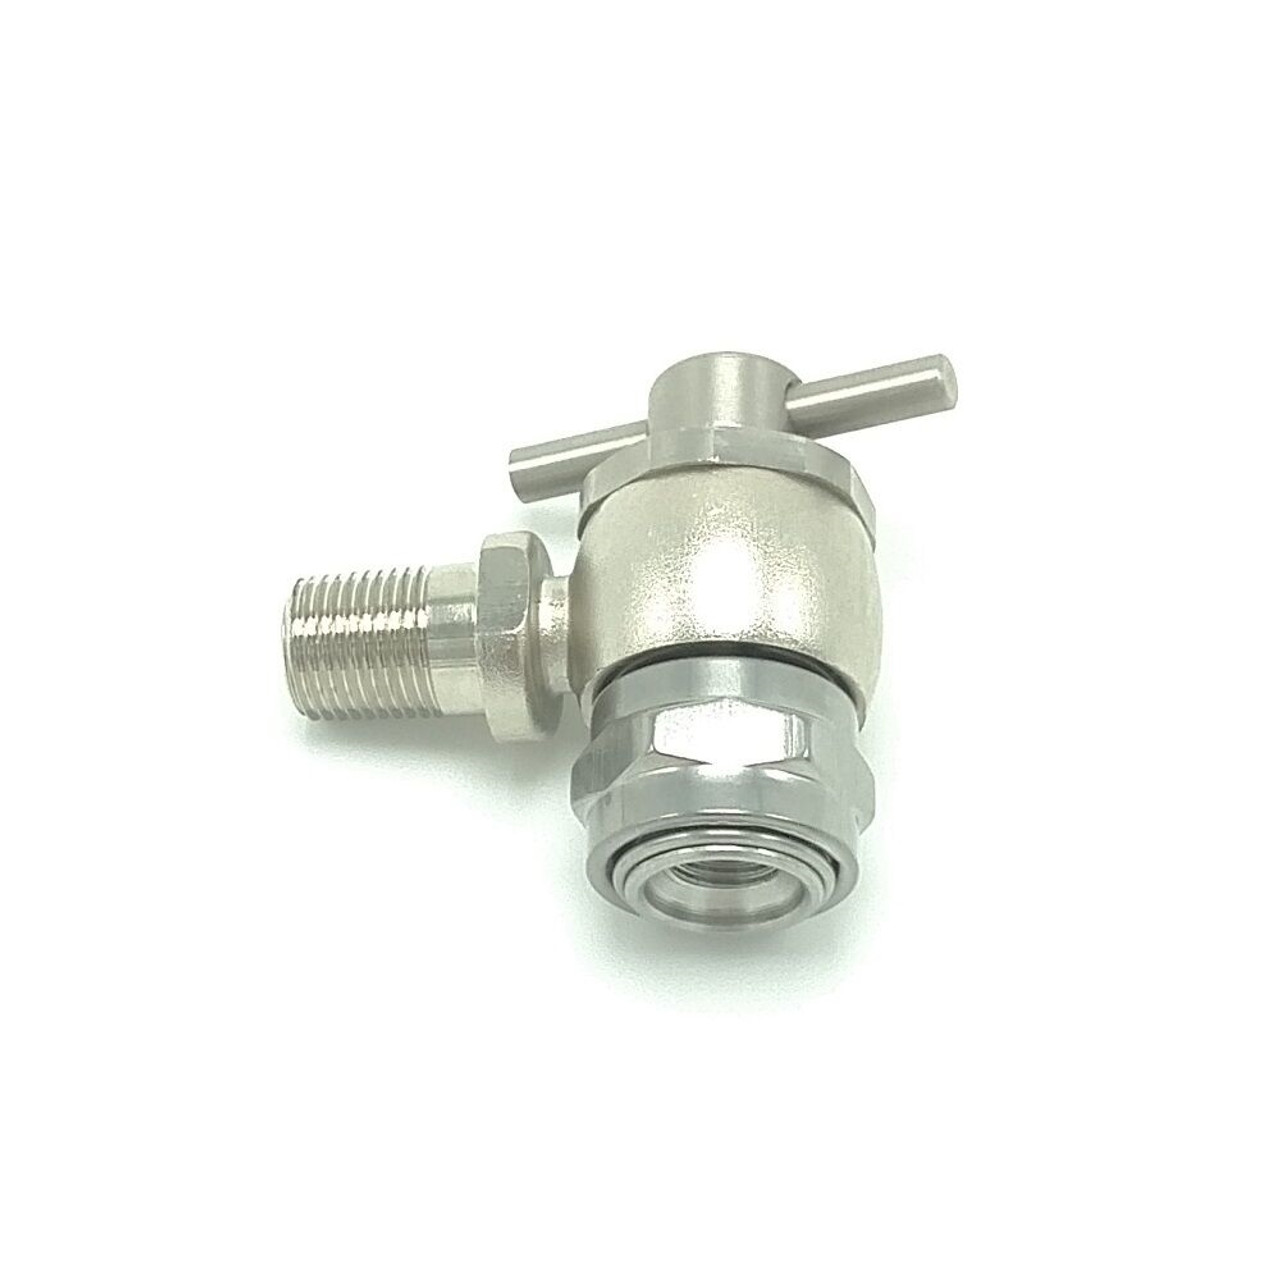 MILH556 - 8921 high pressure strut service adaptor